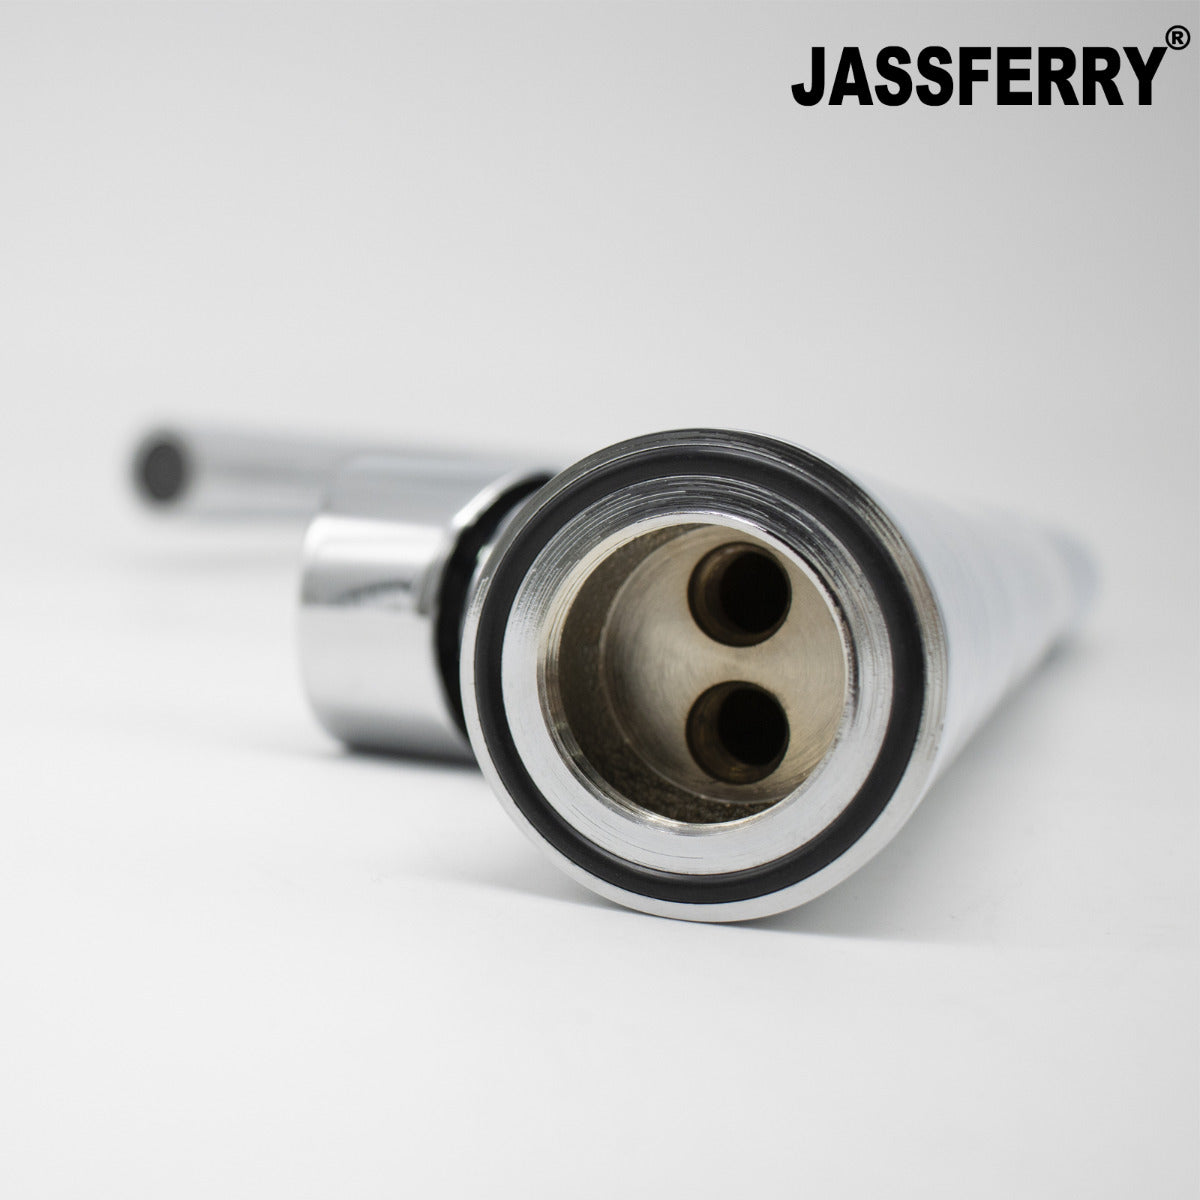 JassferryJASSFERRY Modern Kitchen Sink Mixer Tap with 360 Degree Swivel Spout ChromeKitchen taps